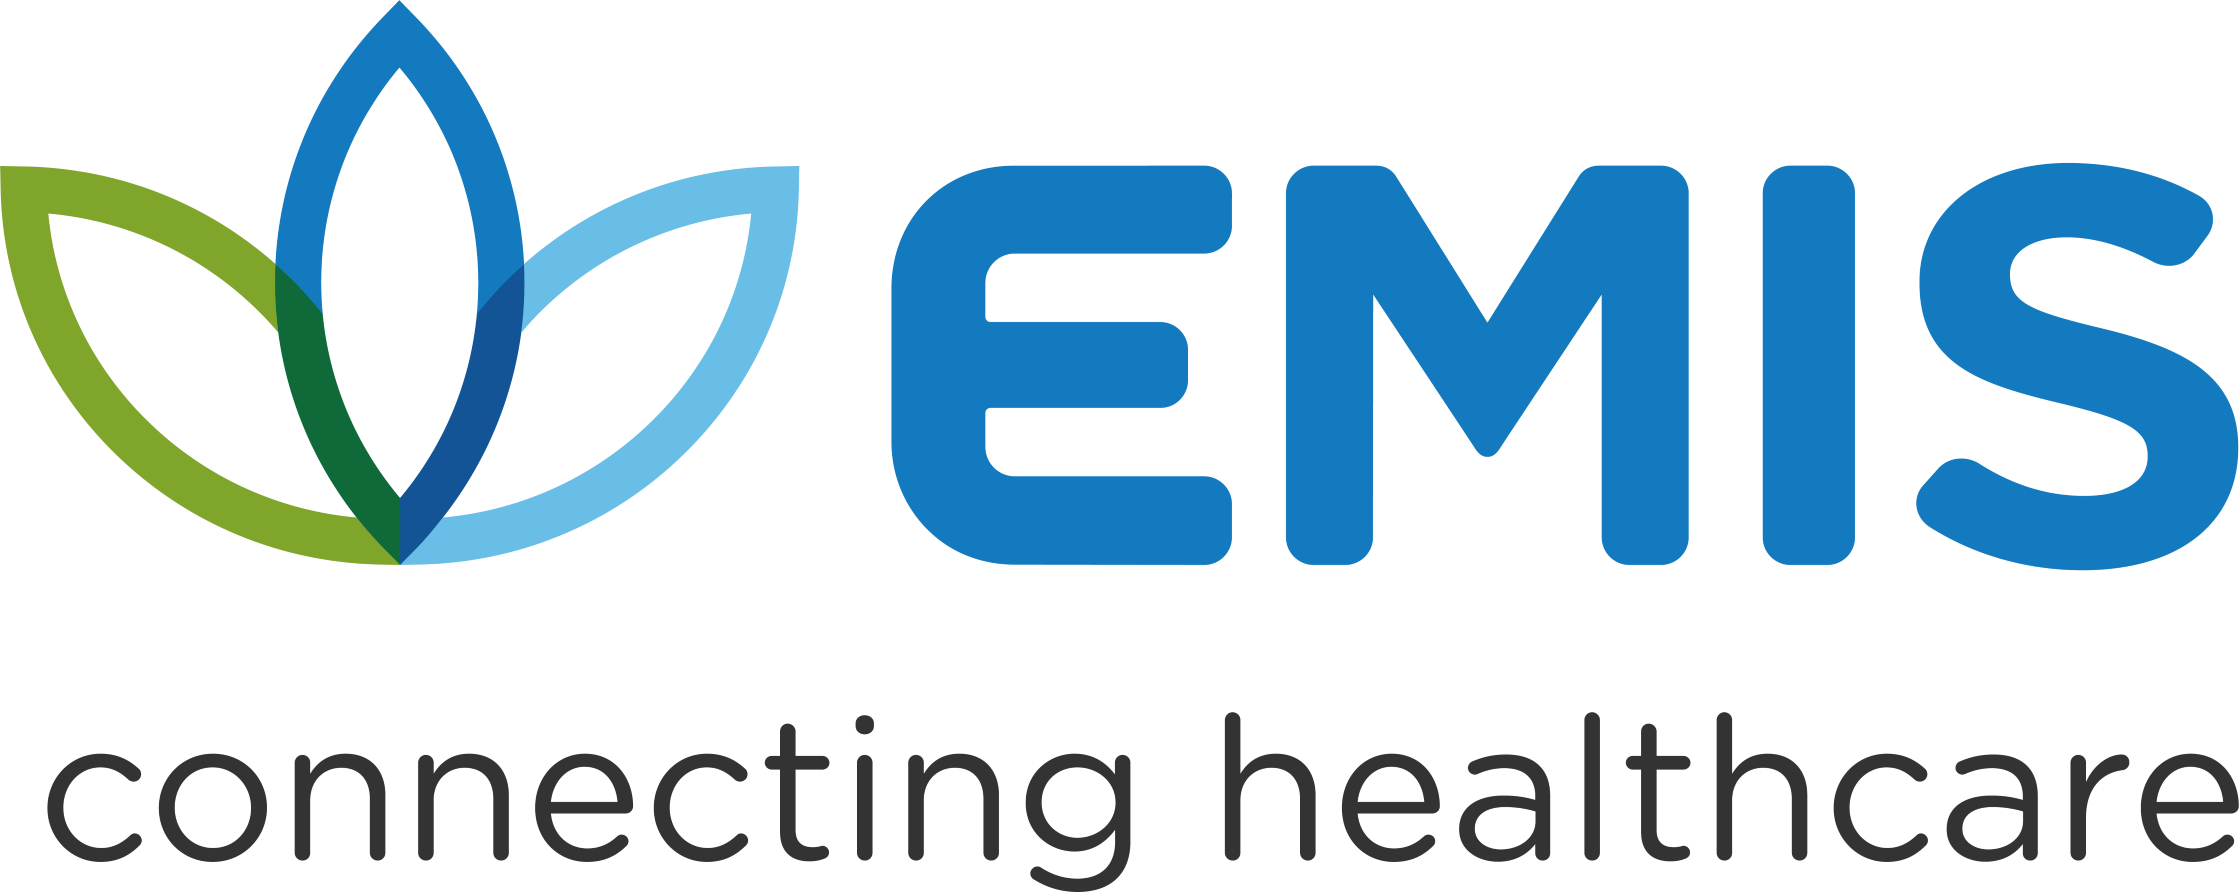 EMIS logo 